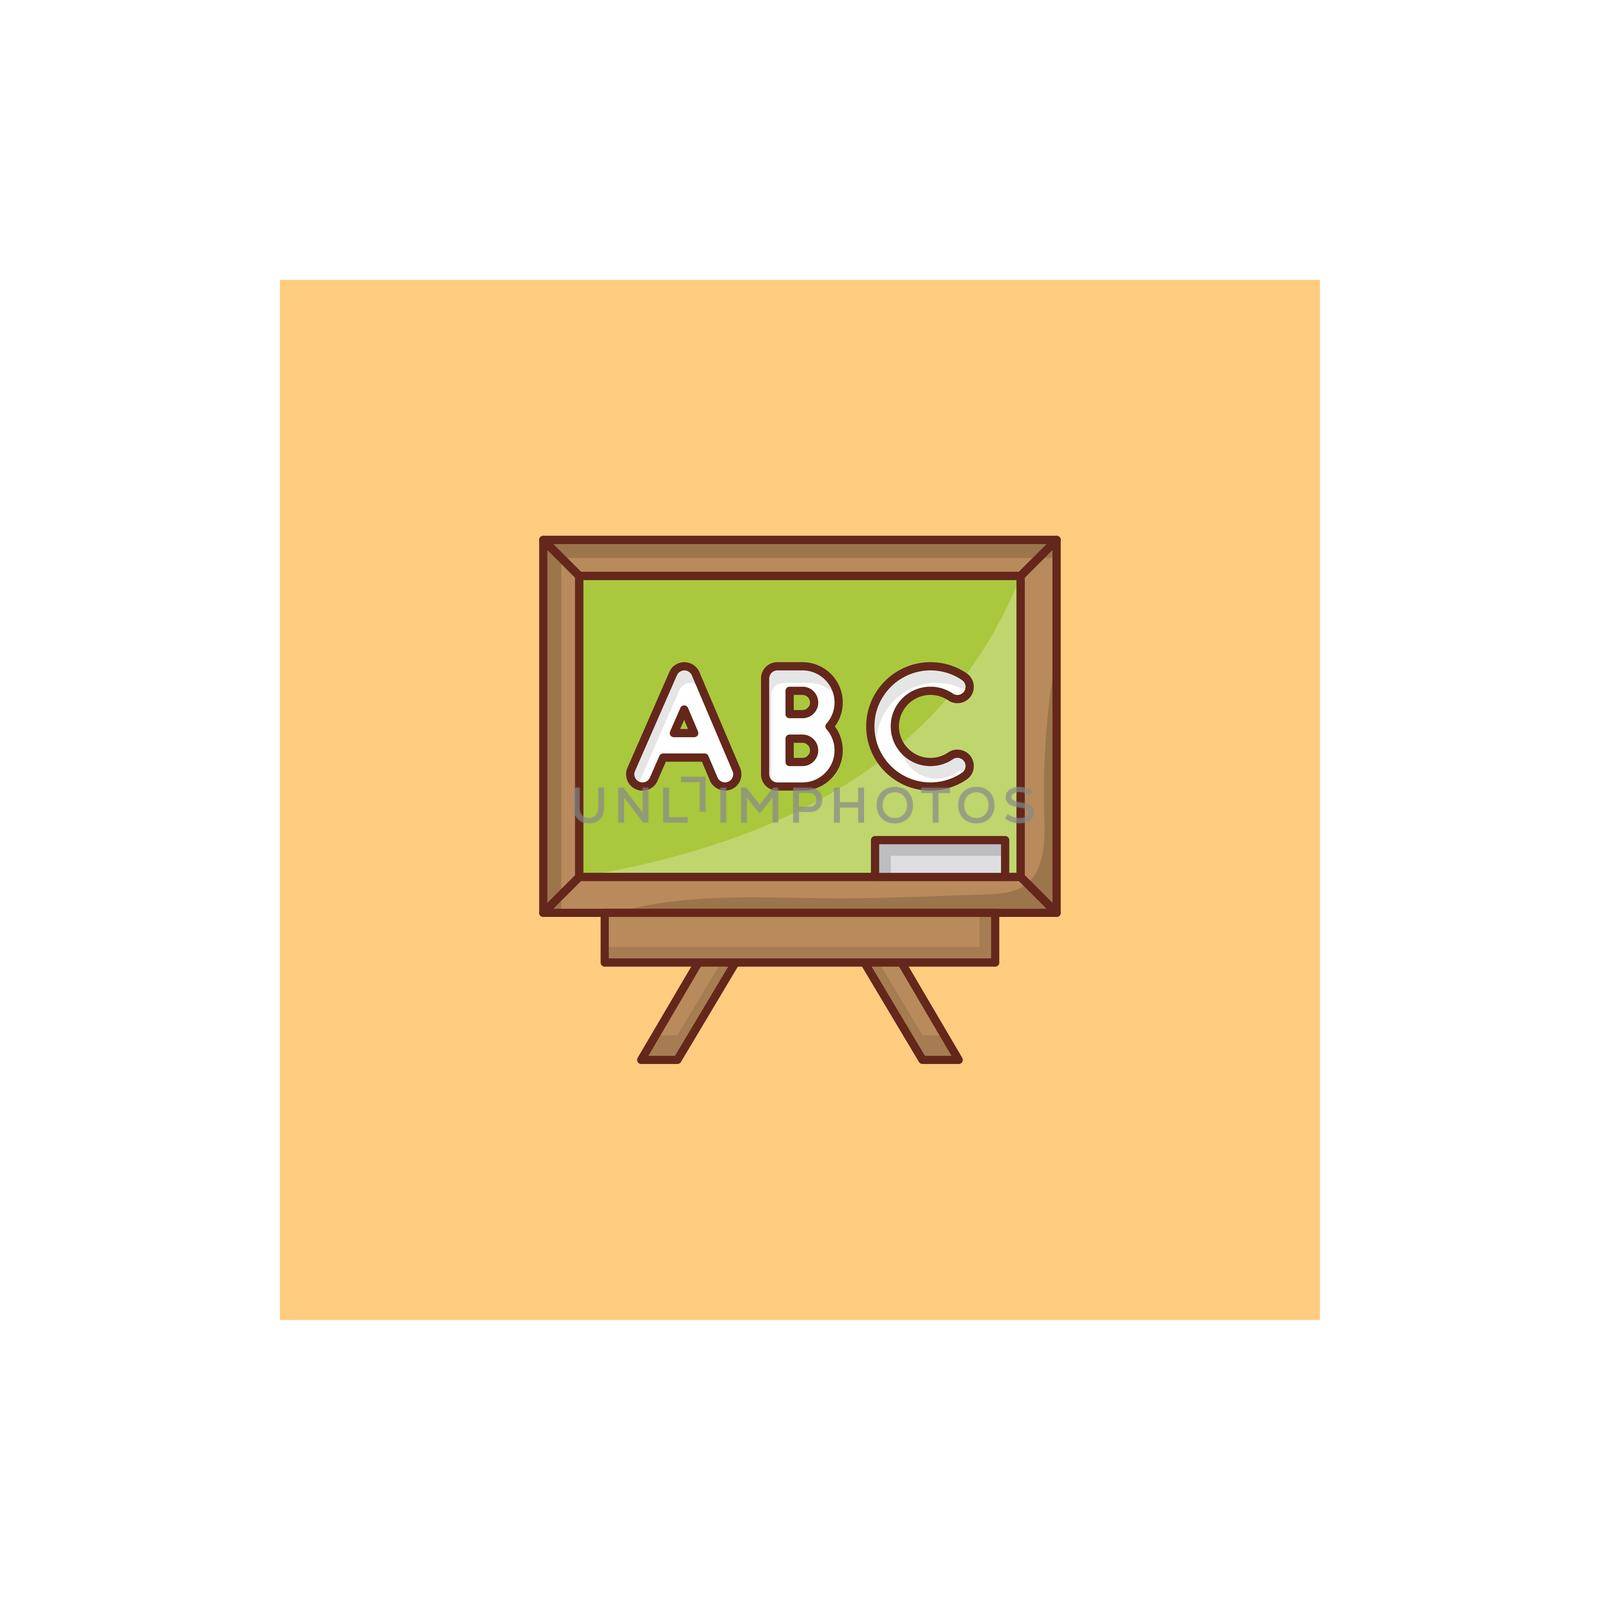 ABC by FlaticonsDesign